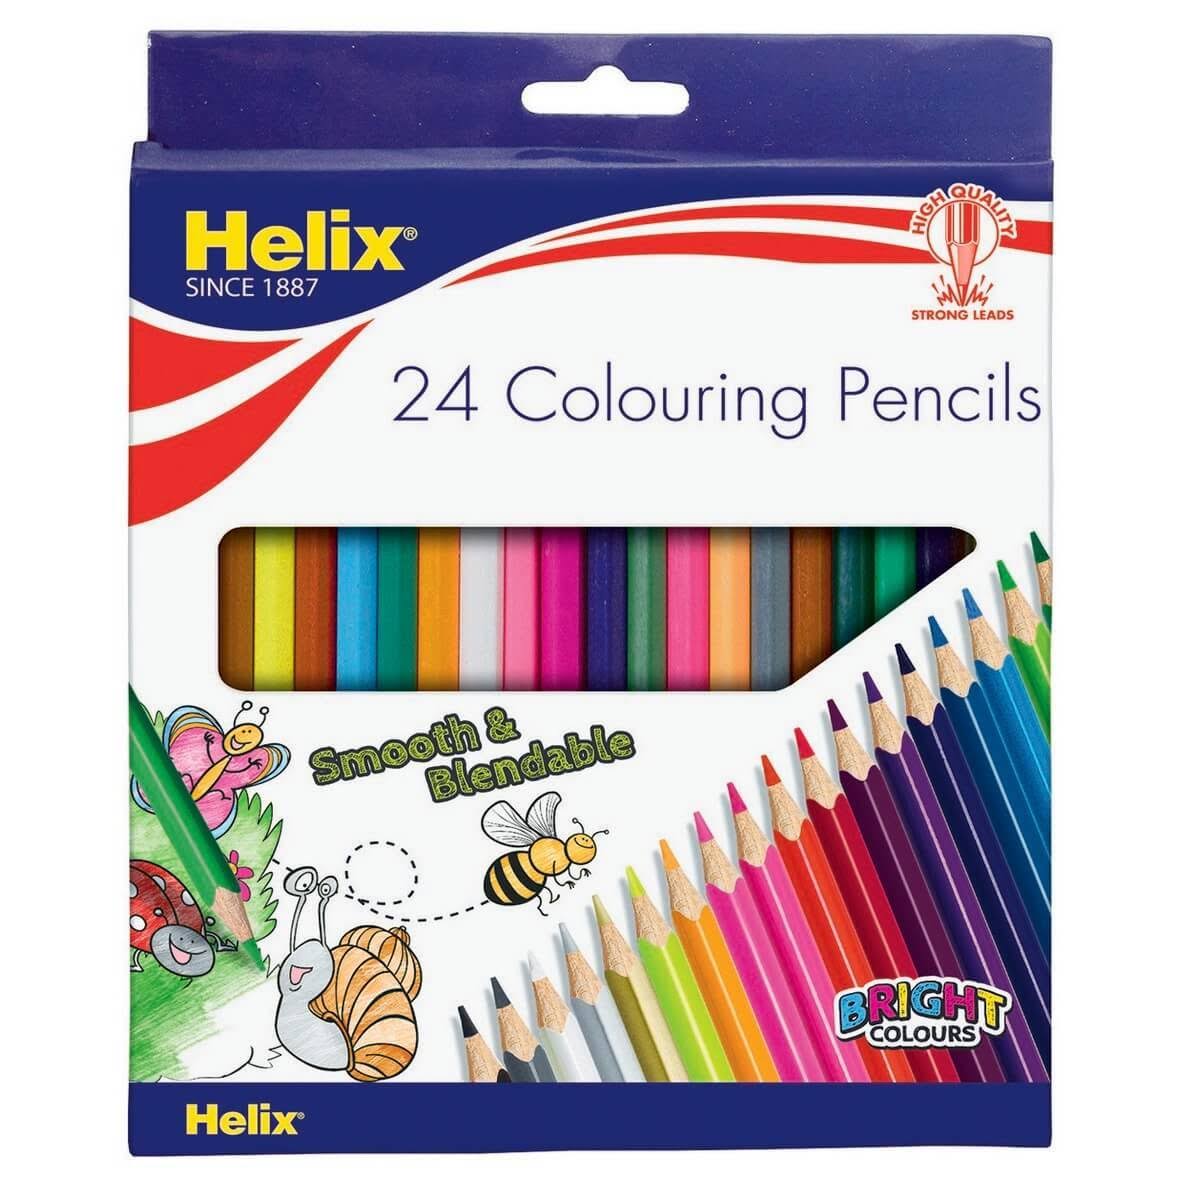 Helix Pencil Crayons - 24 Colouring Pencils